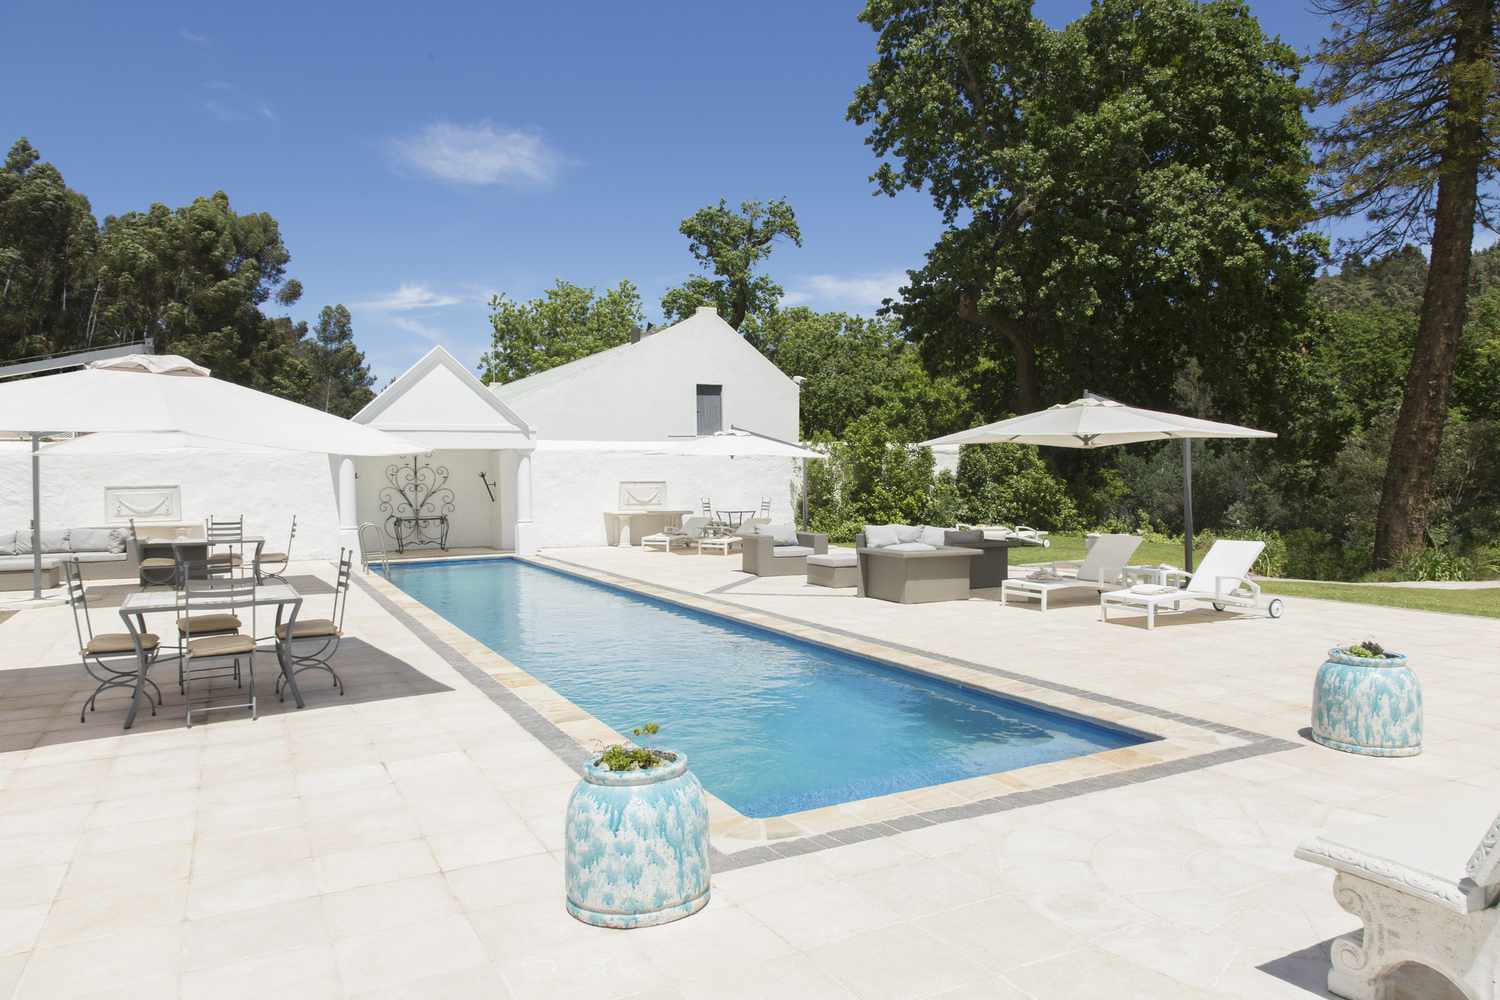 A lap pool set against white tile, patio furniture, and white umbrellas.